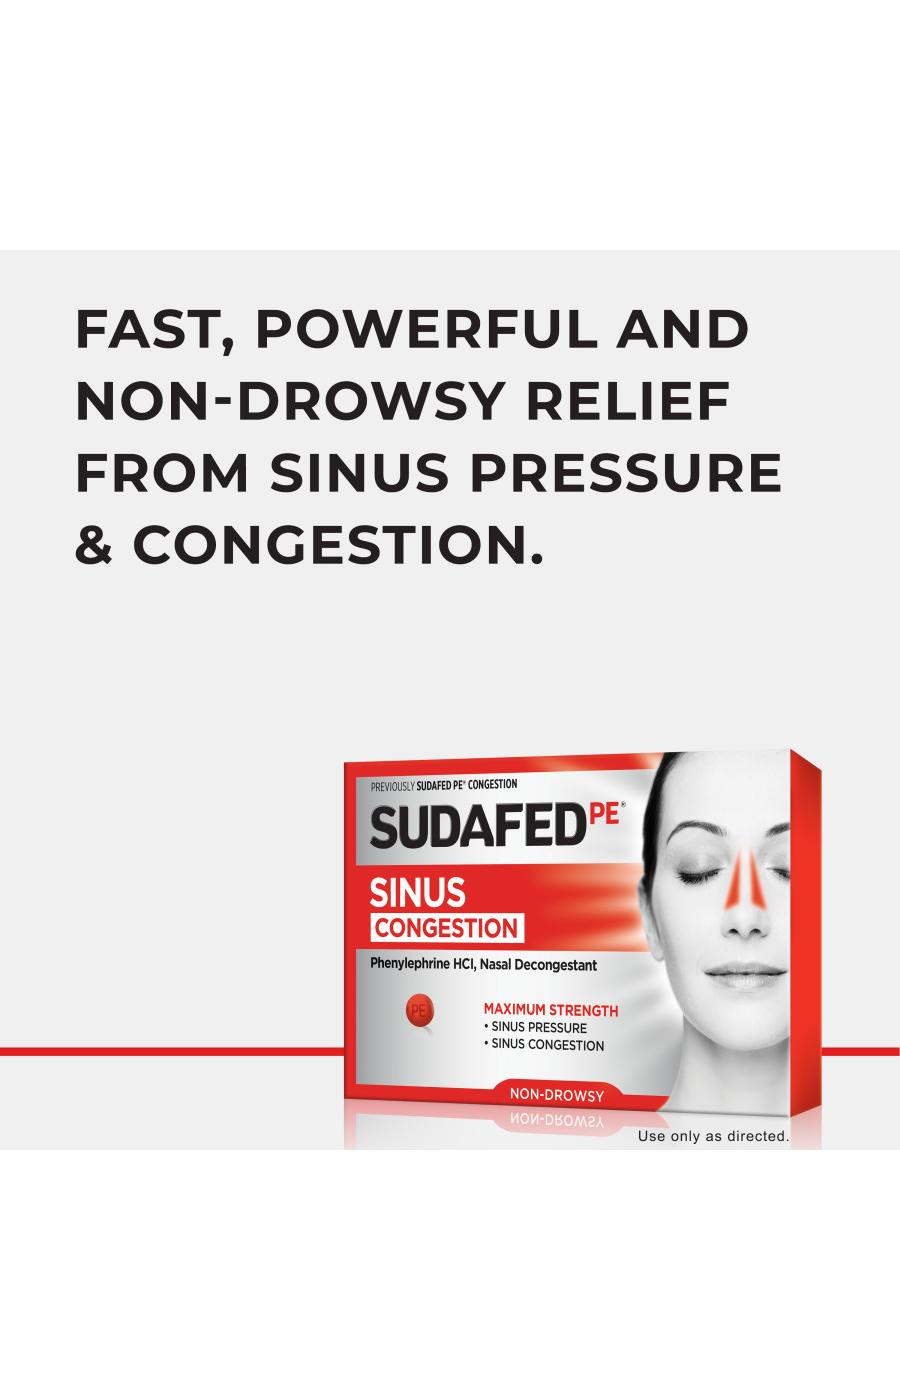 Sudafed PE Sinus Congestion Tablets; image 2 of 2